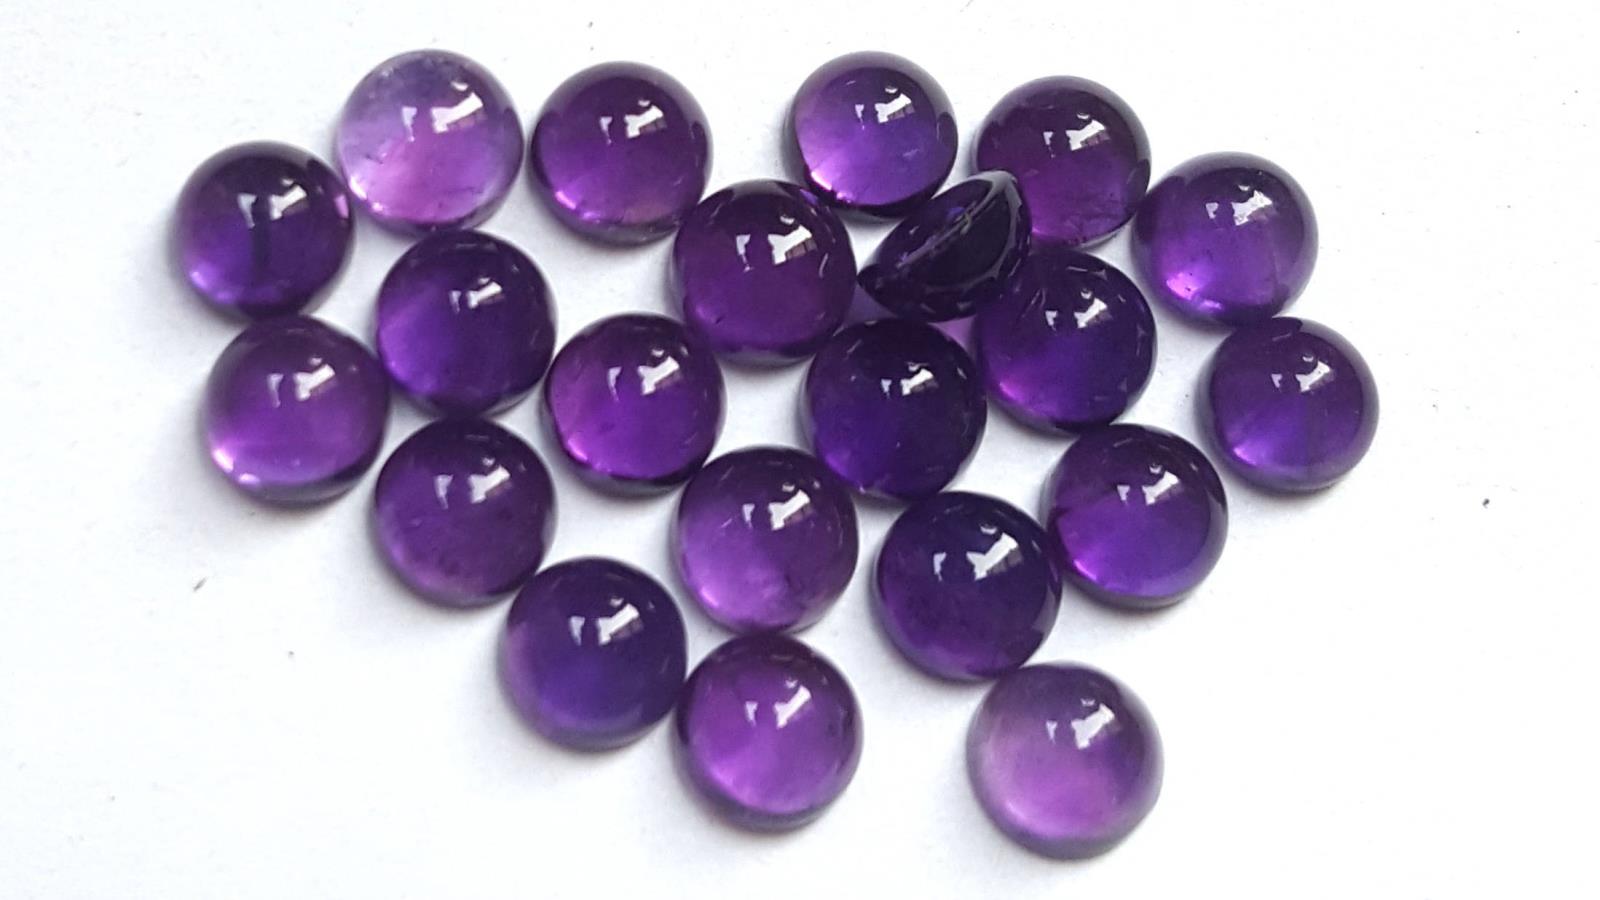 Harga batu kecubung ungu kalimantan asli